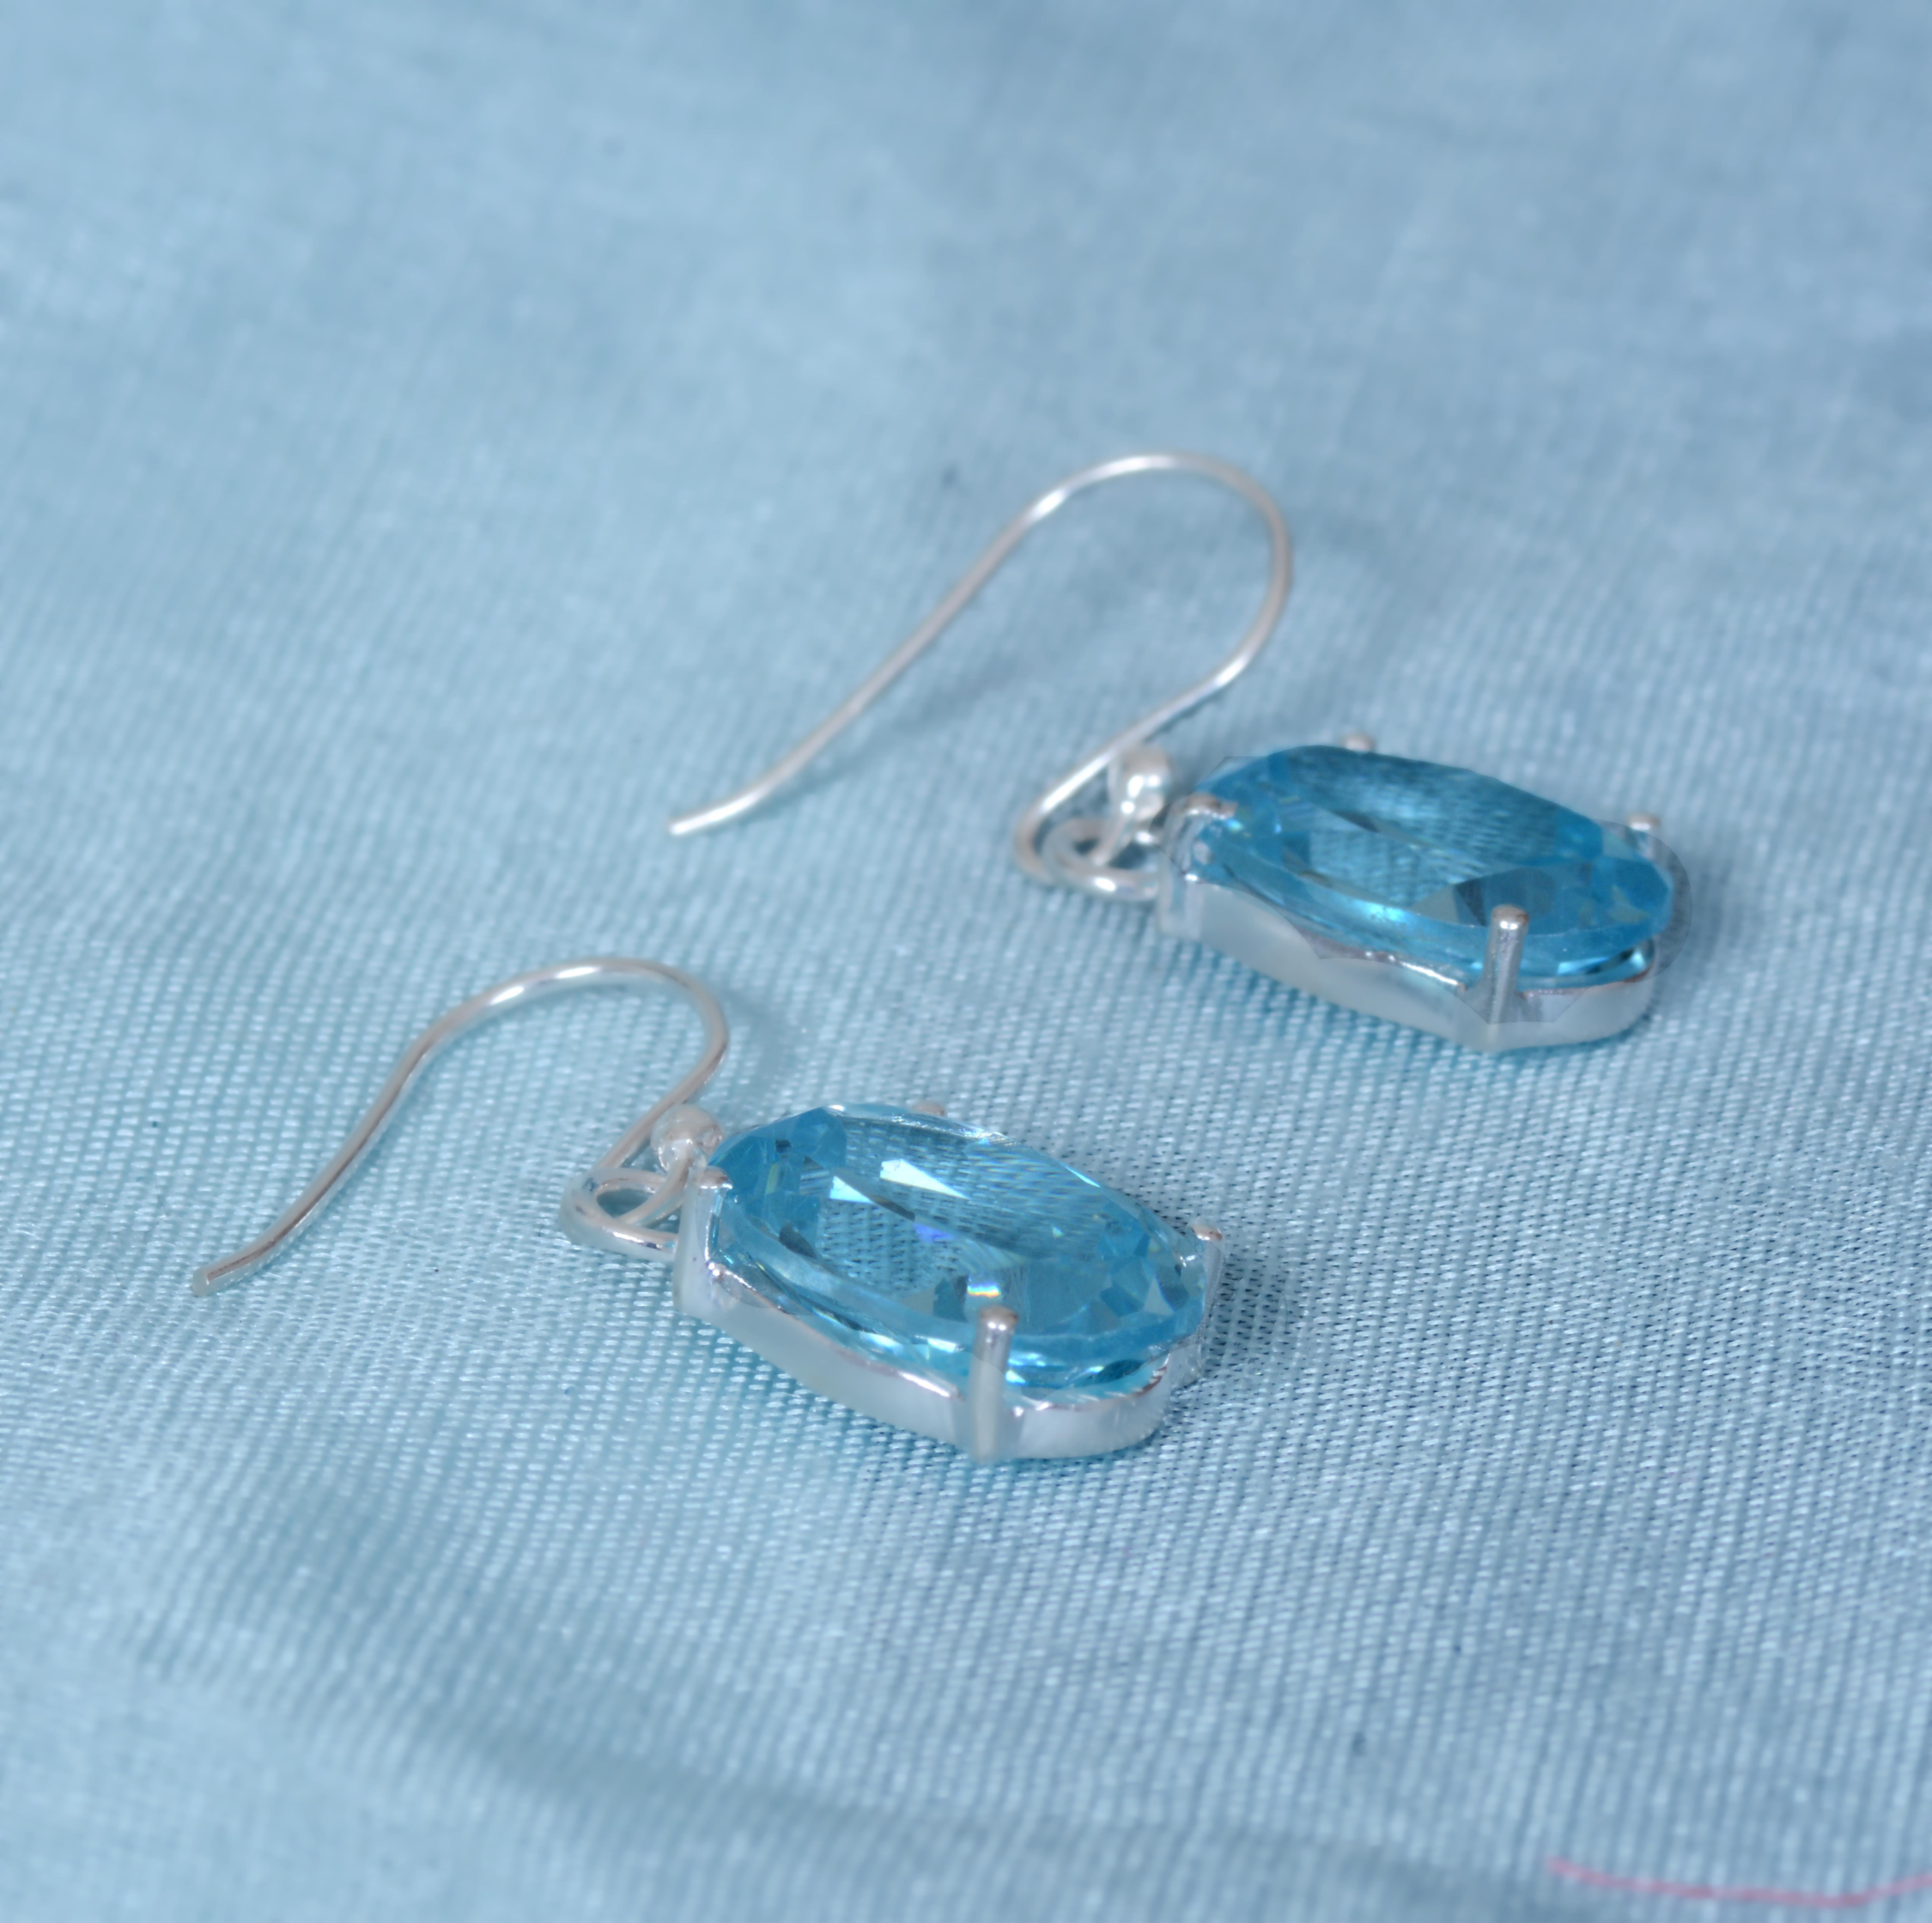 925 Sterling Silver Natural Blue Topaz Earrings